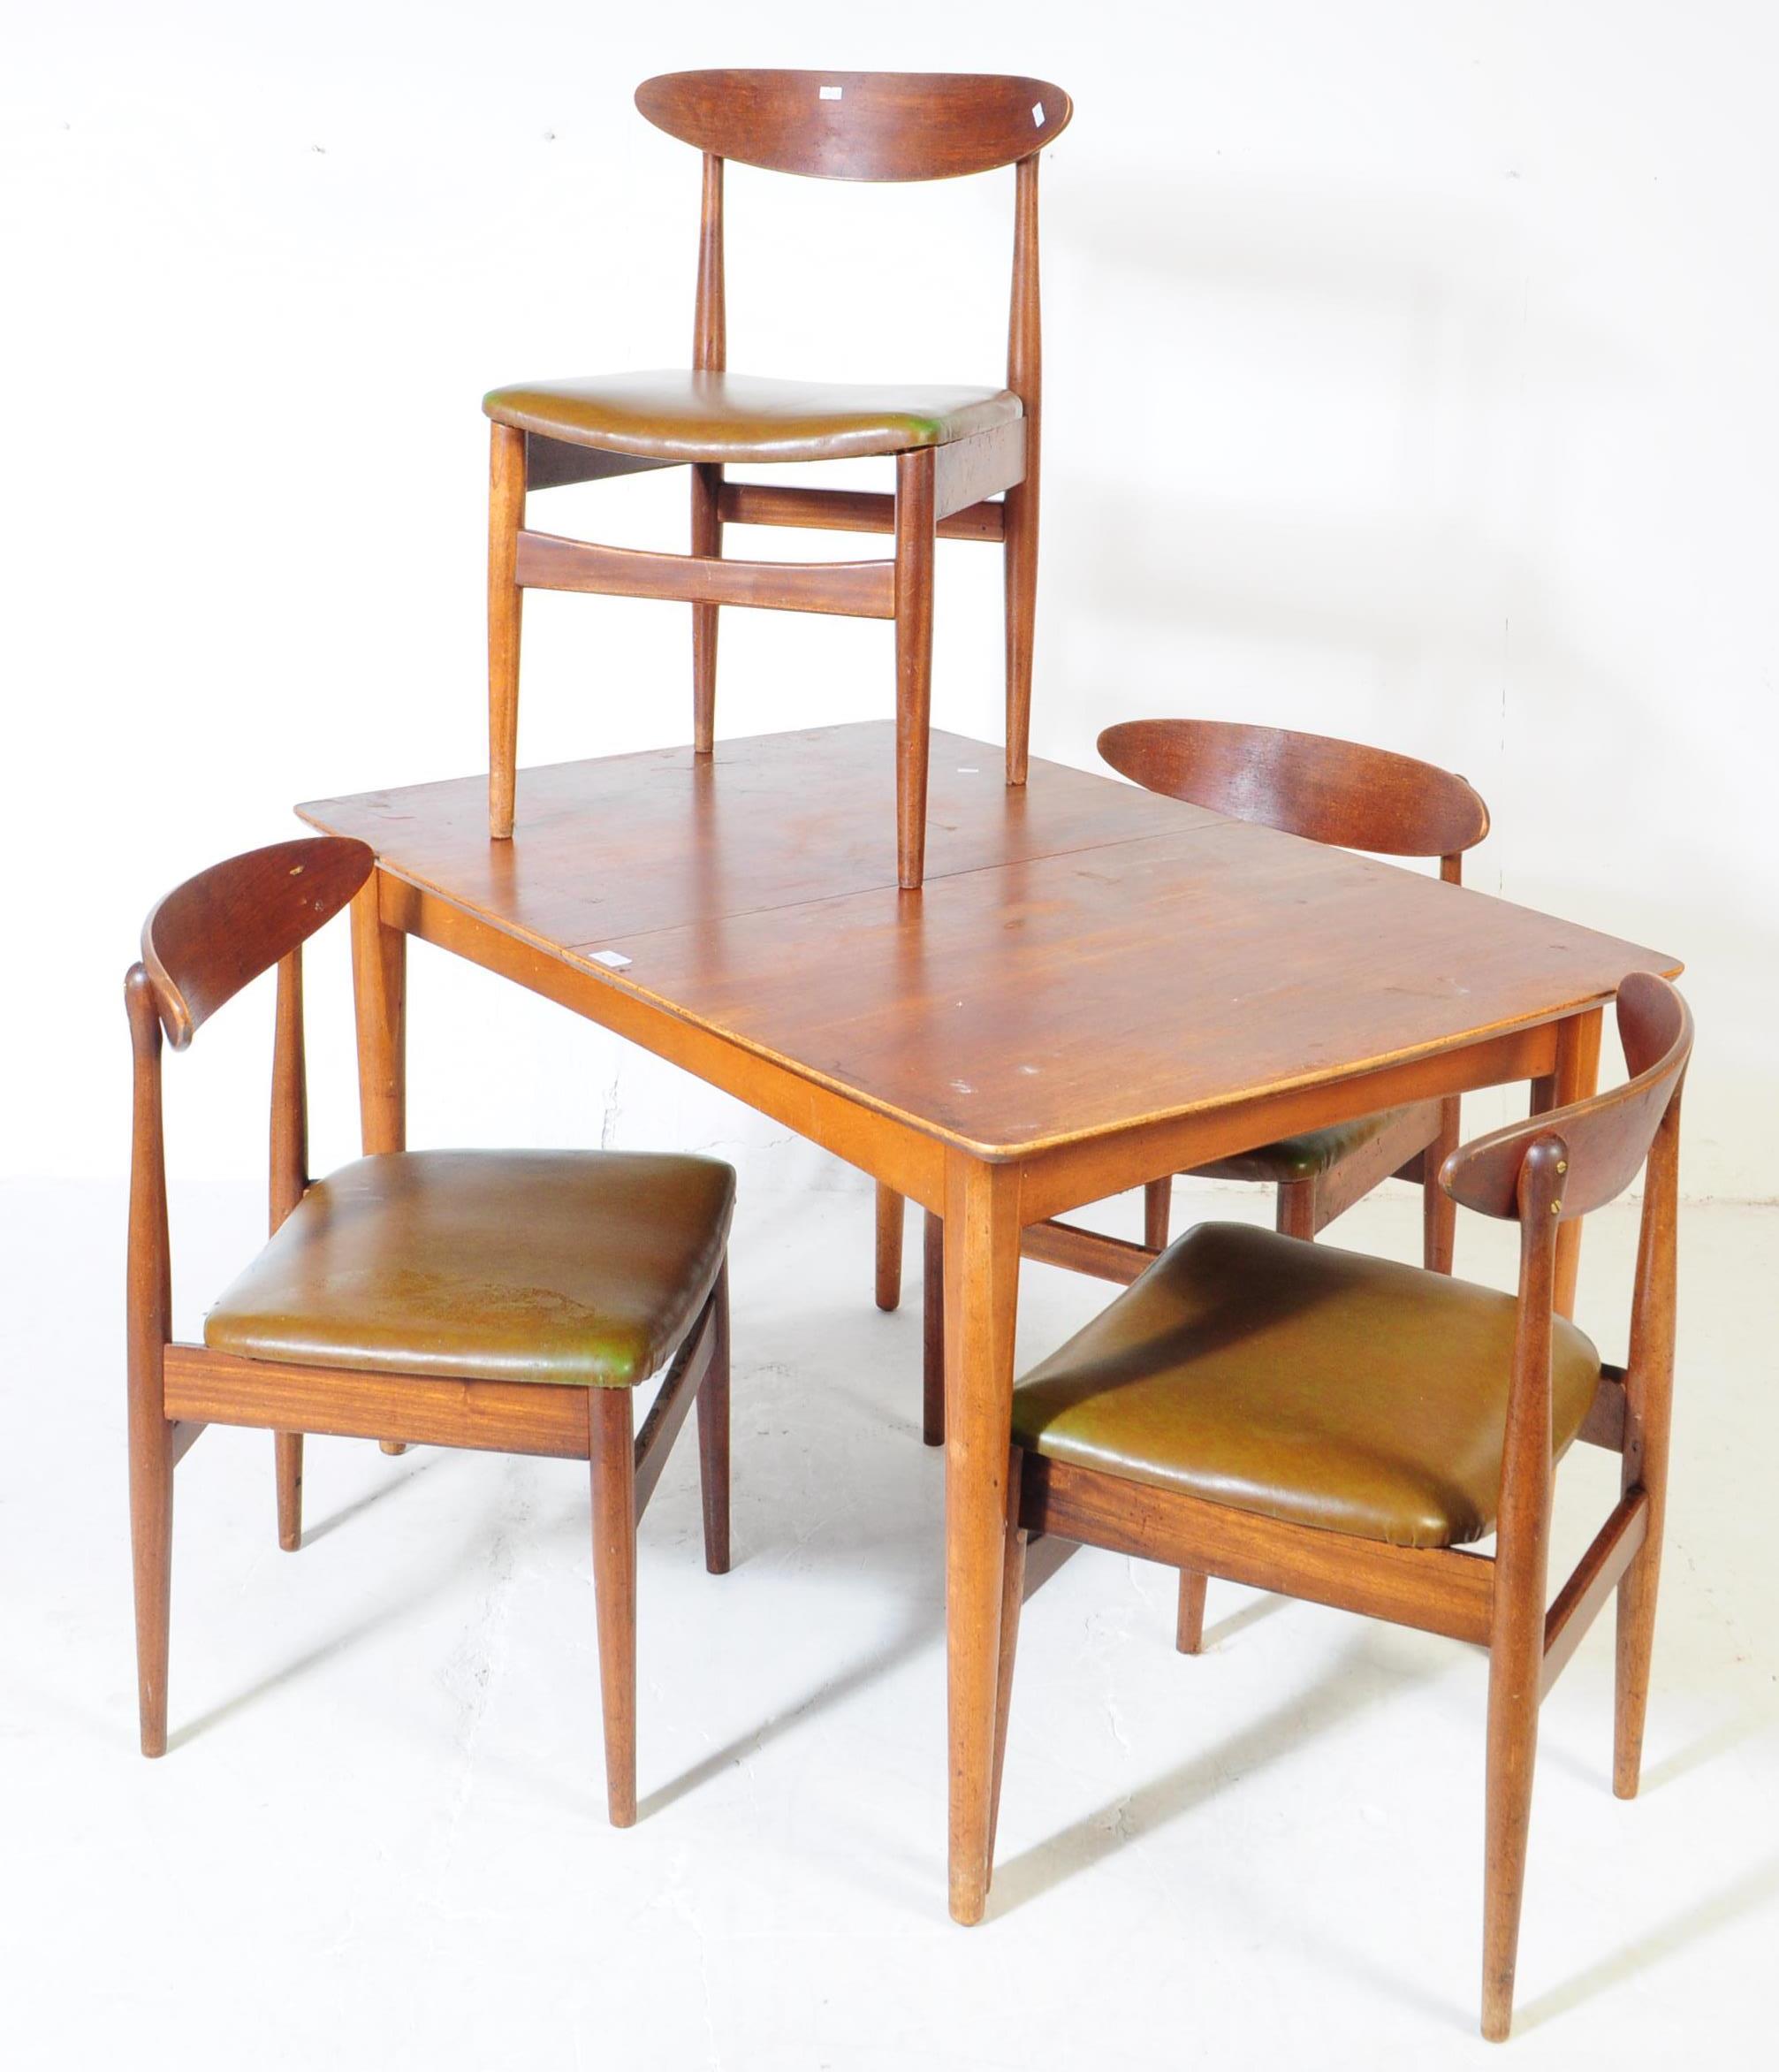 BRITISH MODERN DESIGN - MID CENTURY TEAK TABLE & CHAIRS